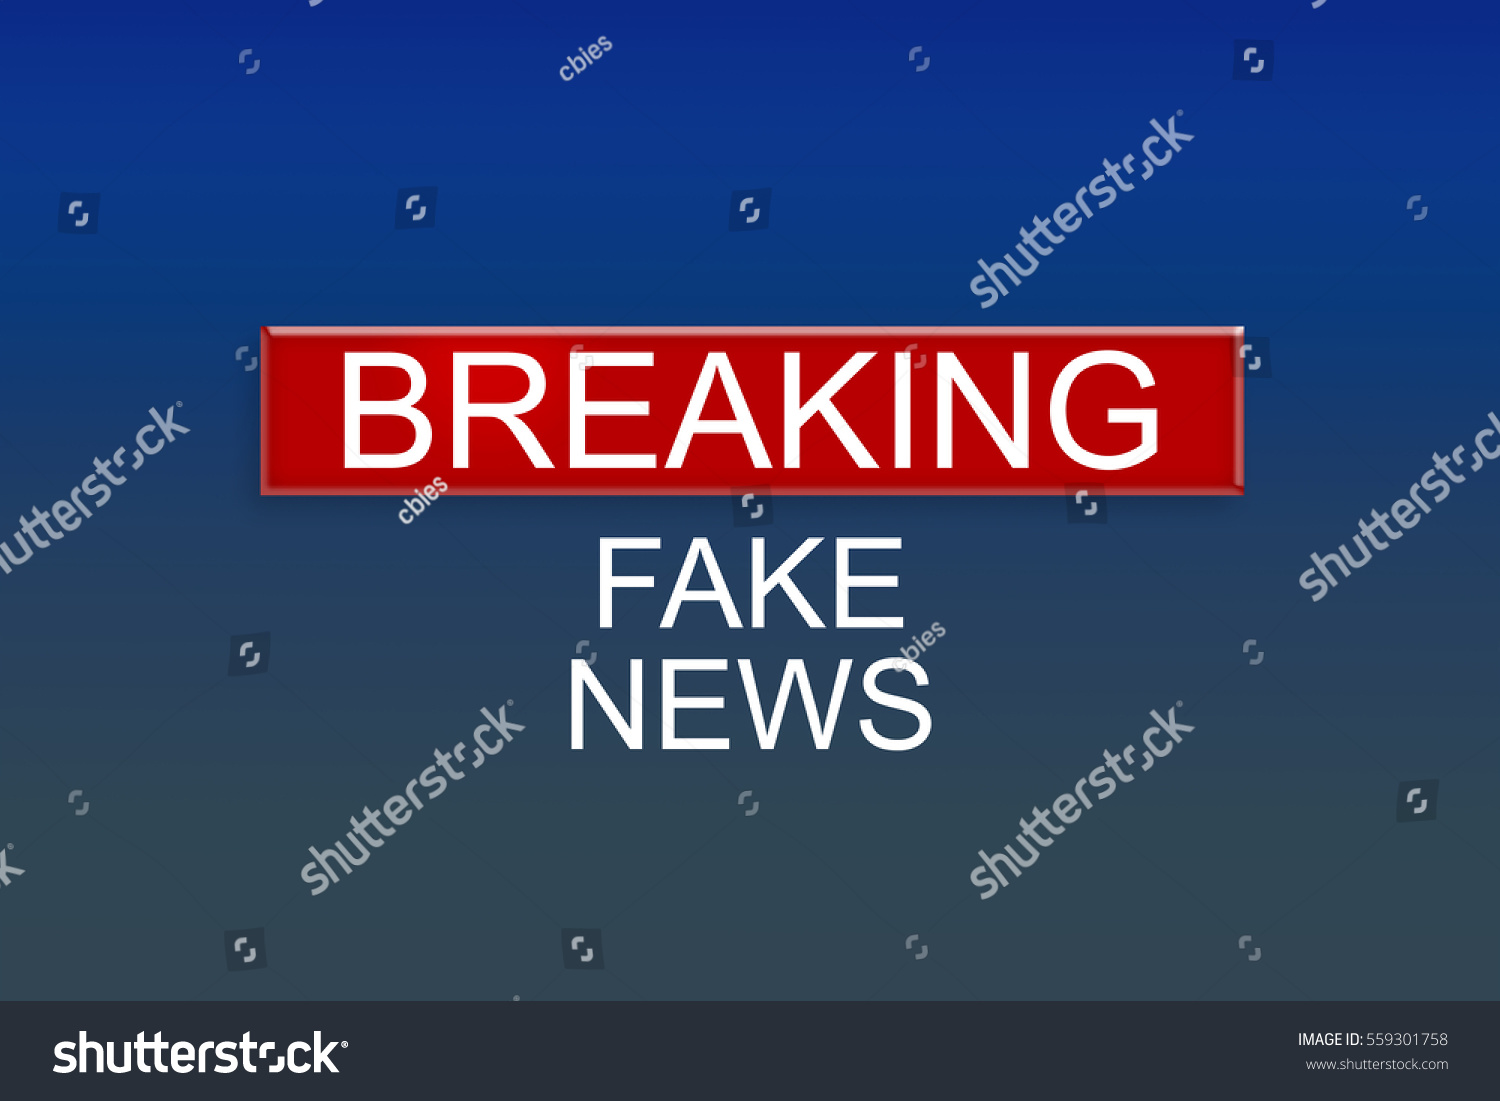 News Background: Breaking Fake News, 3d illustration